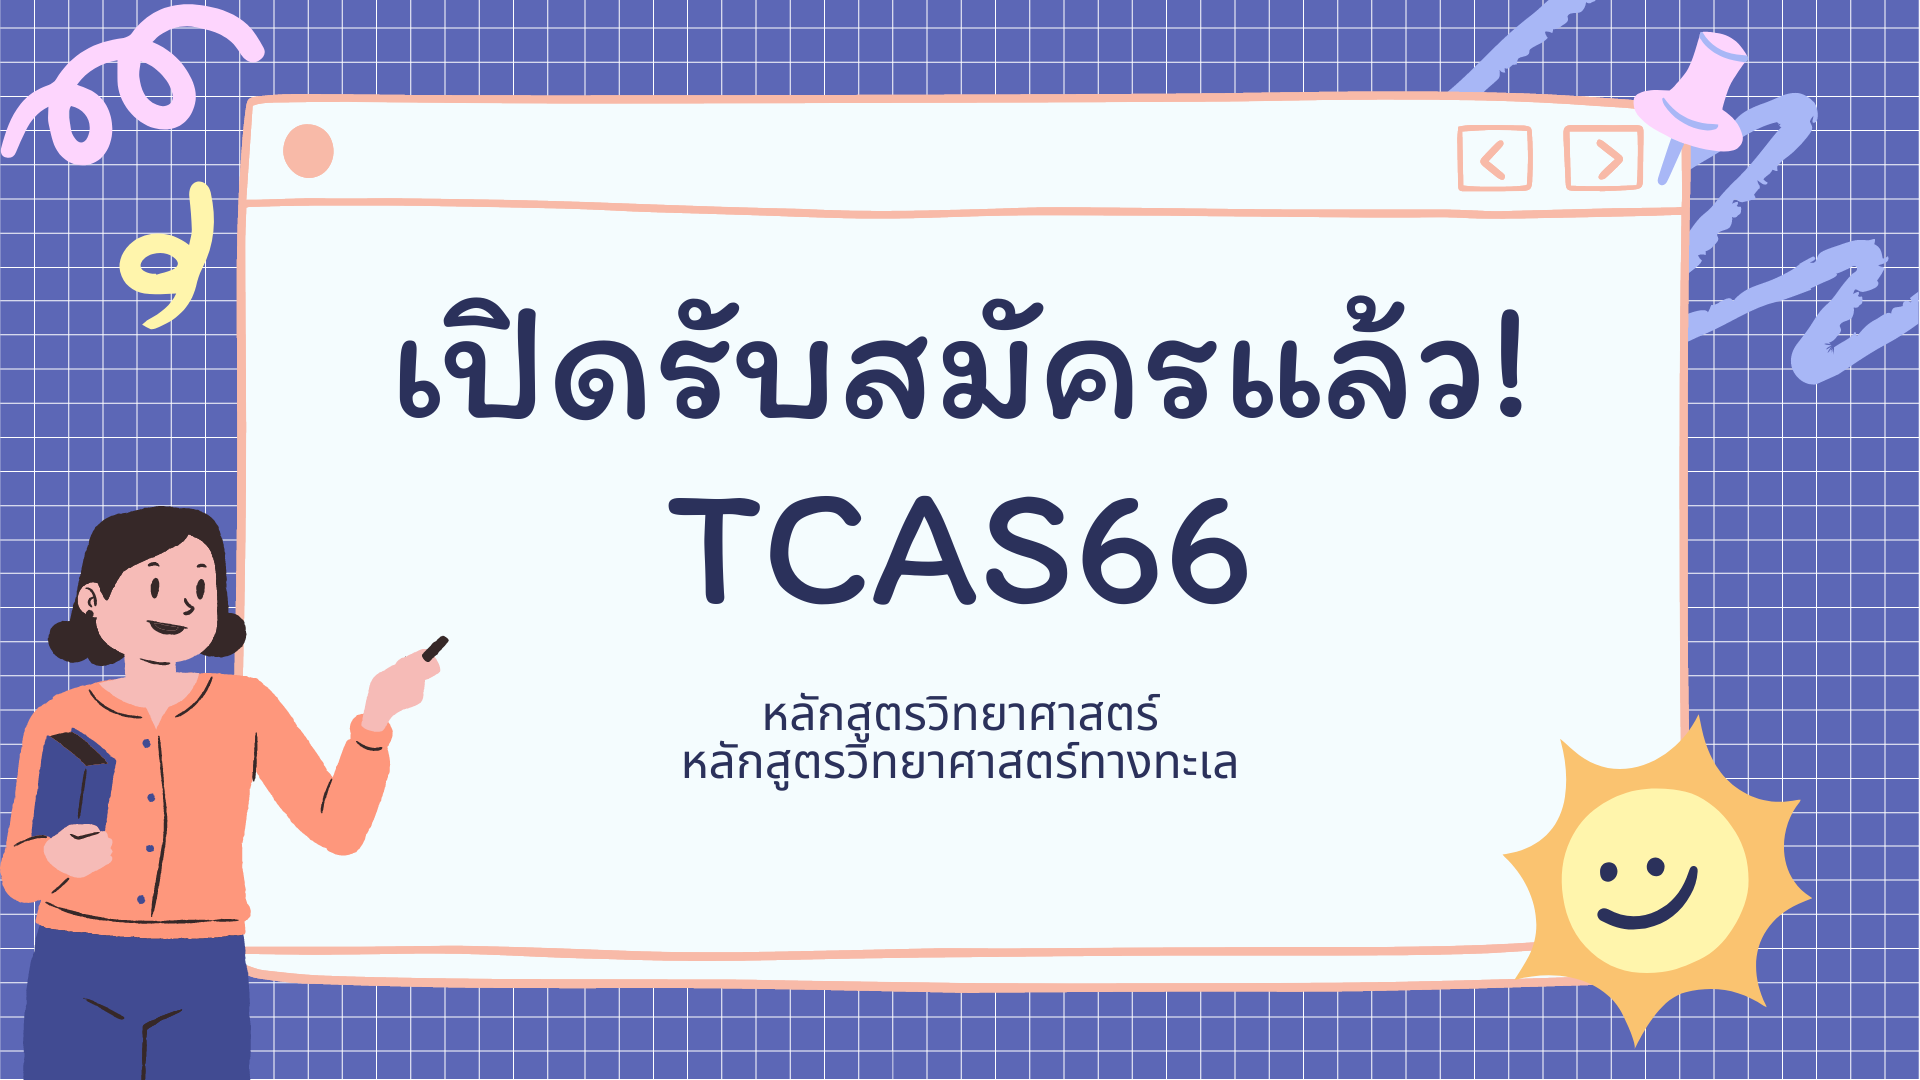 TCAS66 Application